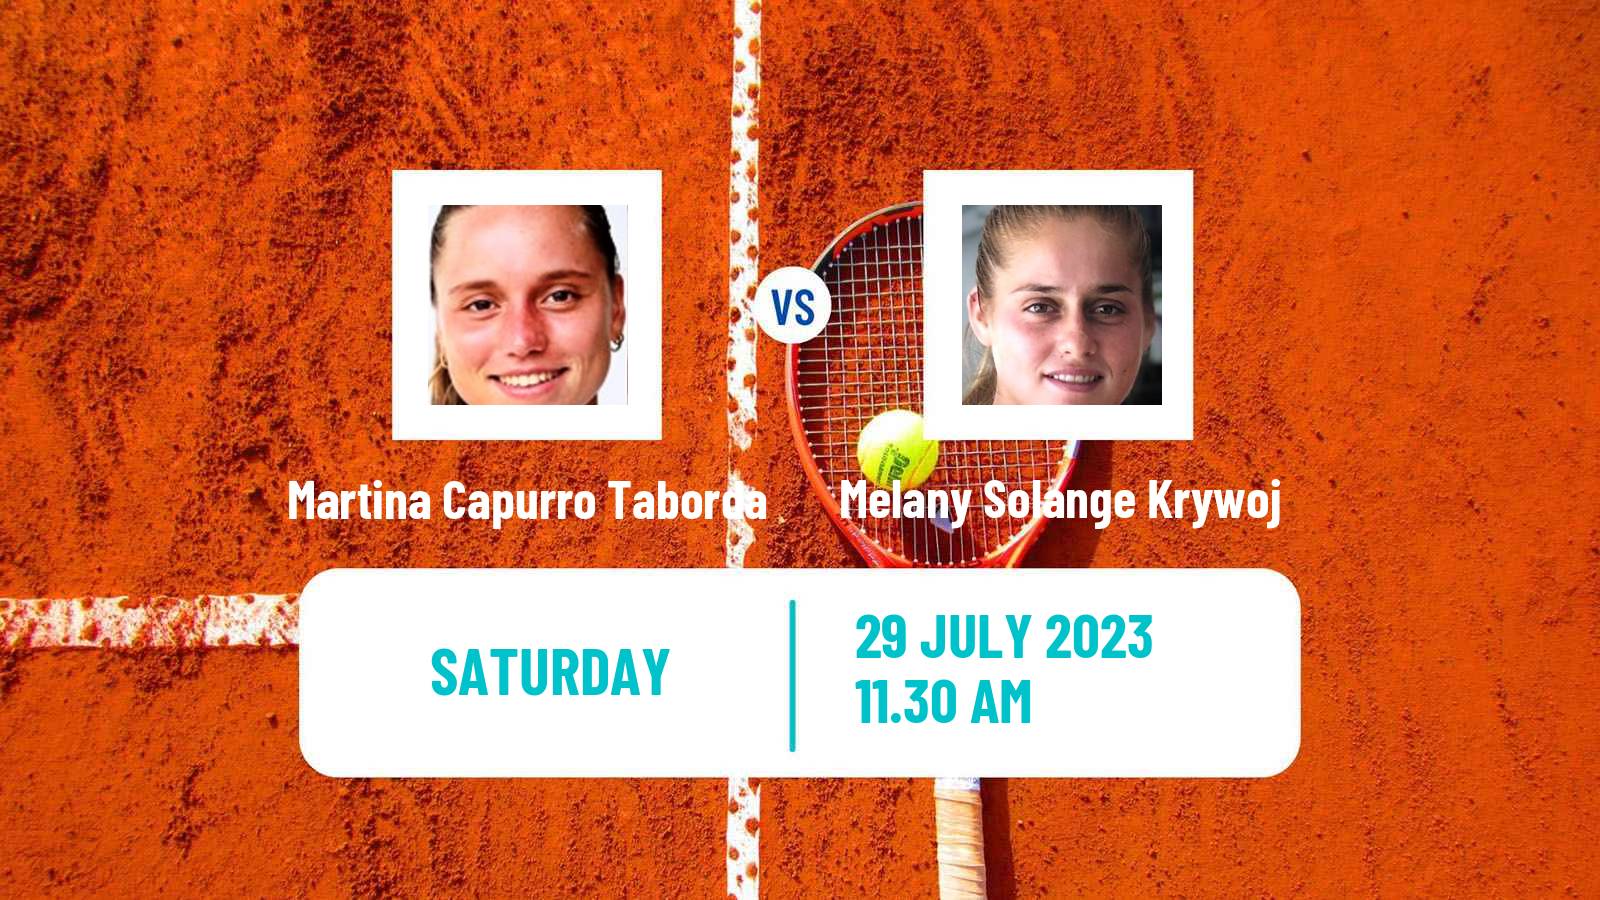 Tennis ITF W25 Bragado Women Martina Capurro Taborda - Melany Solange Krywoj